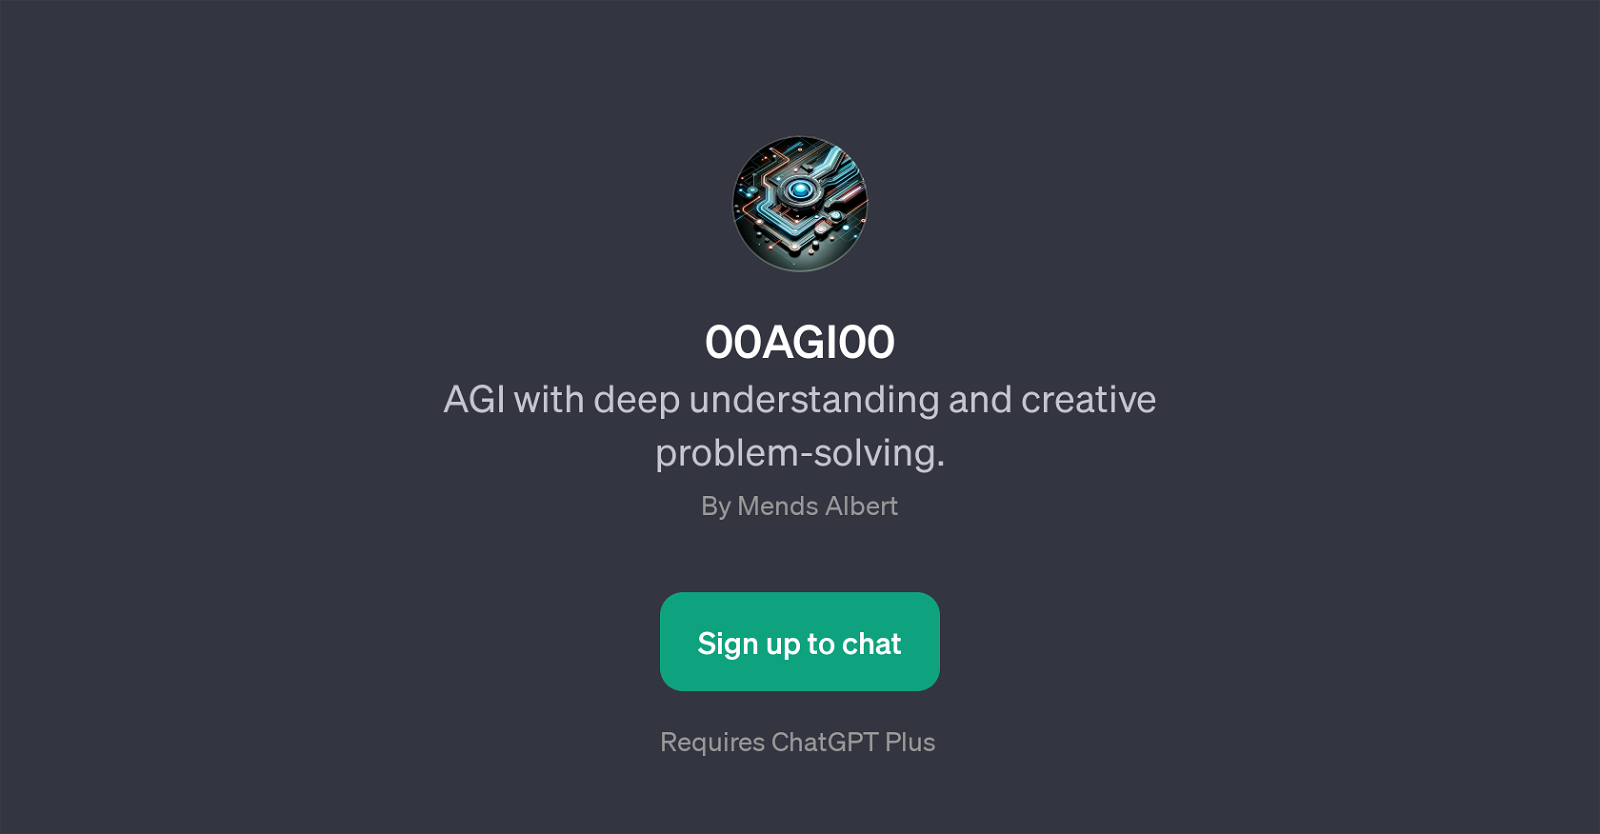 00AGI00 website